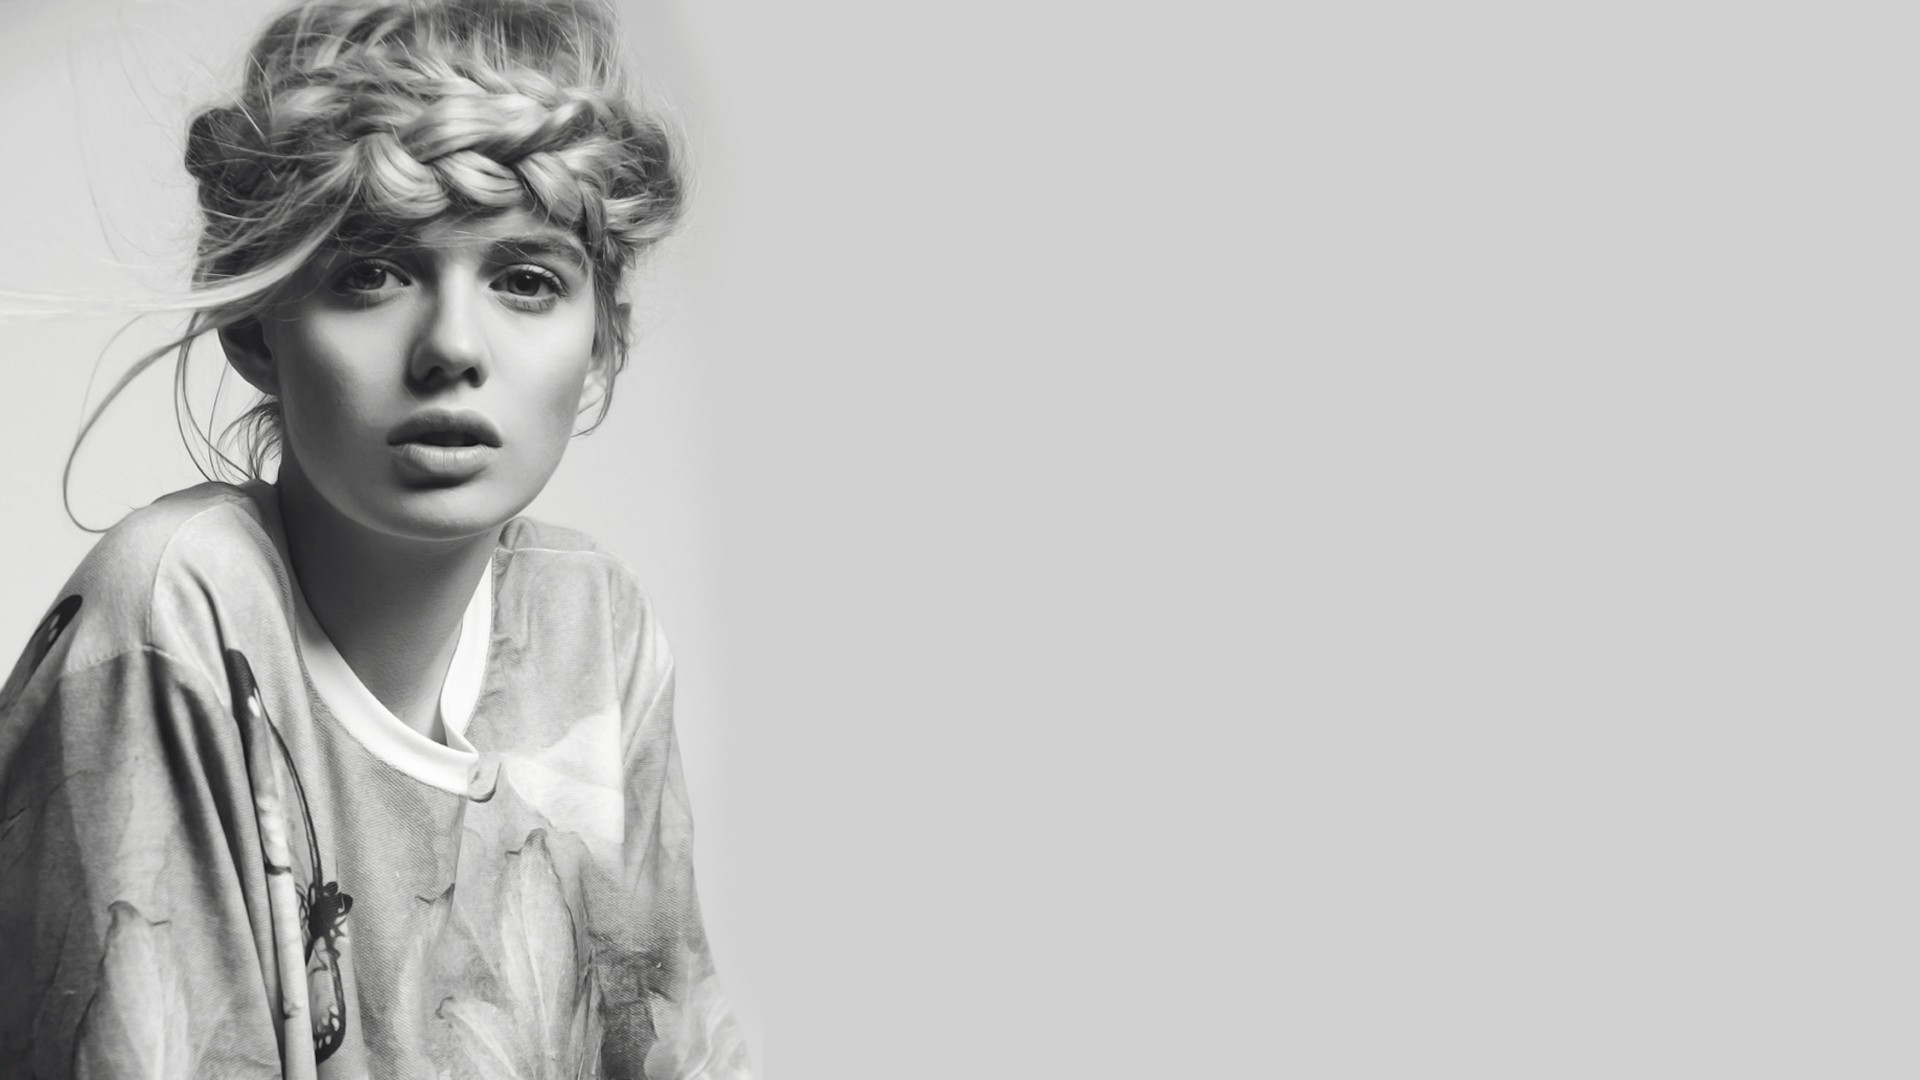 Wallpaper Monochrome, girl portrait, cute